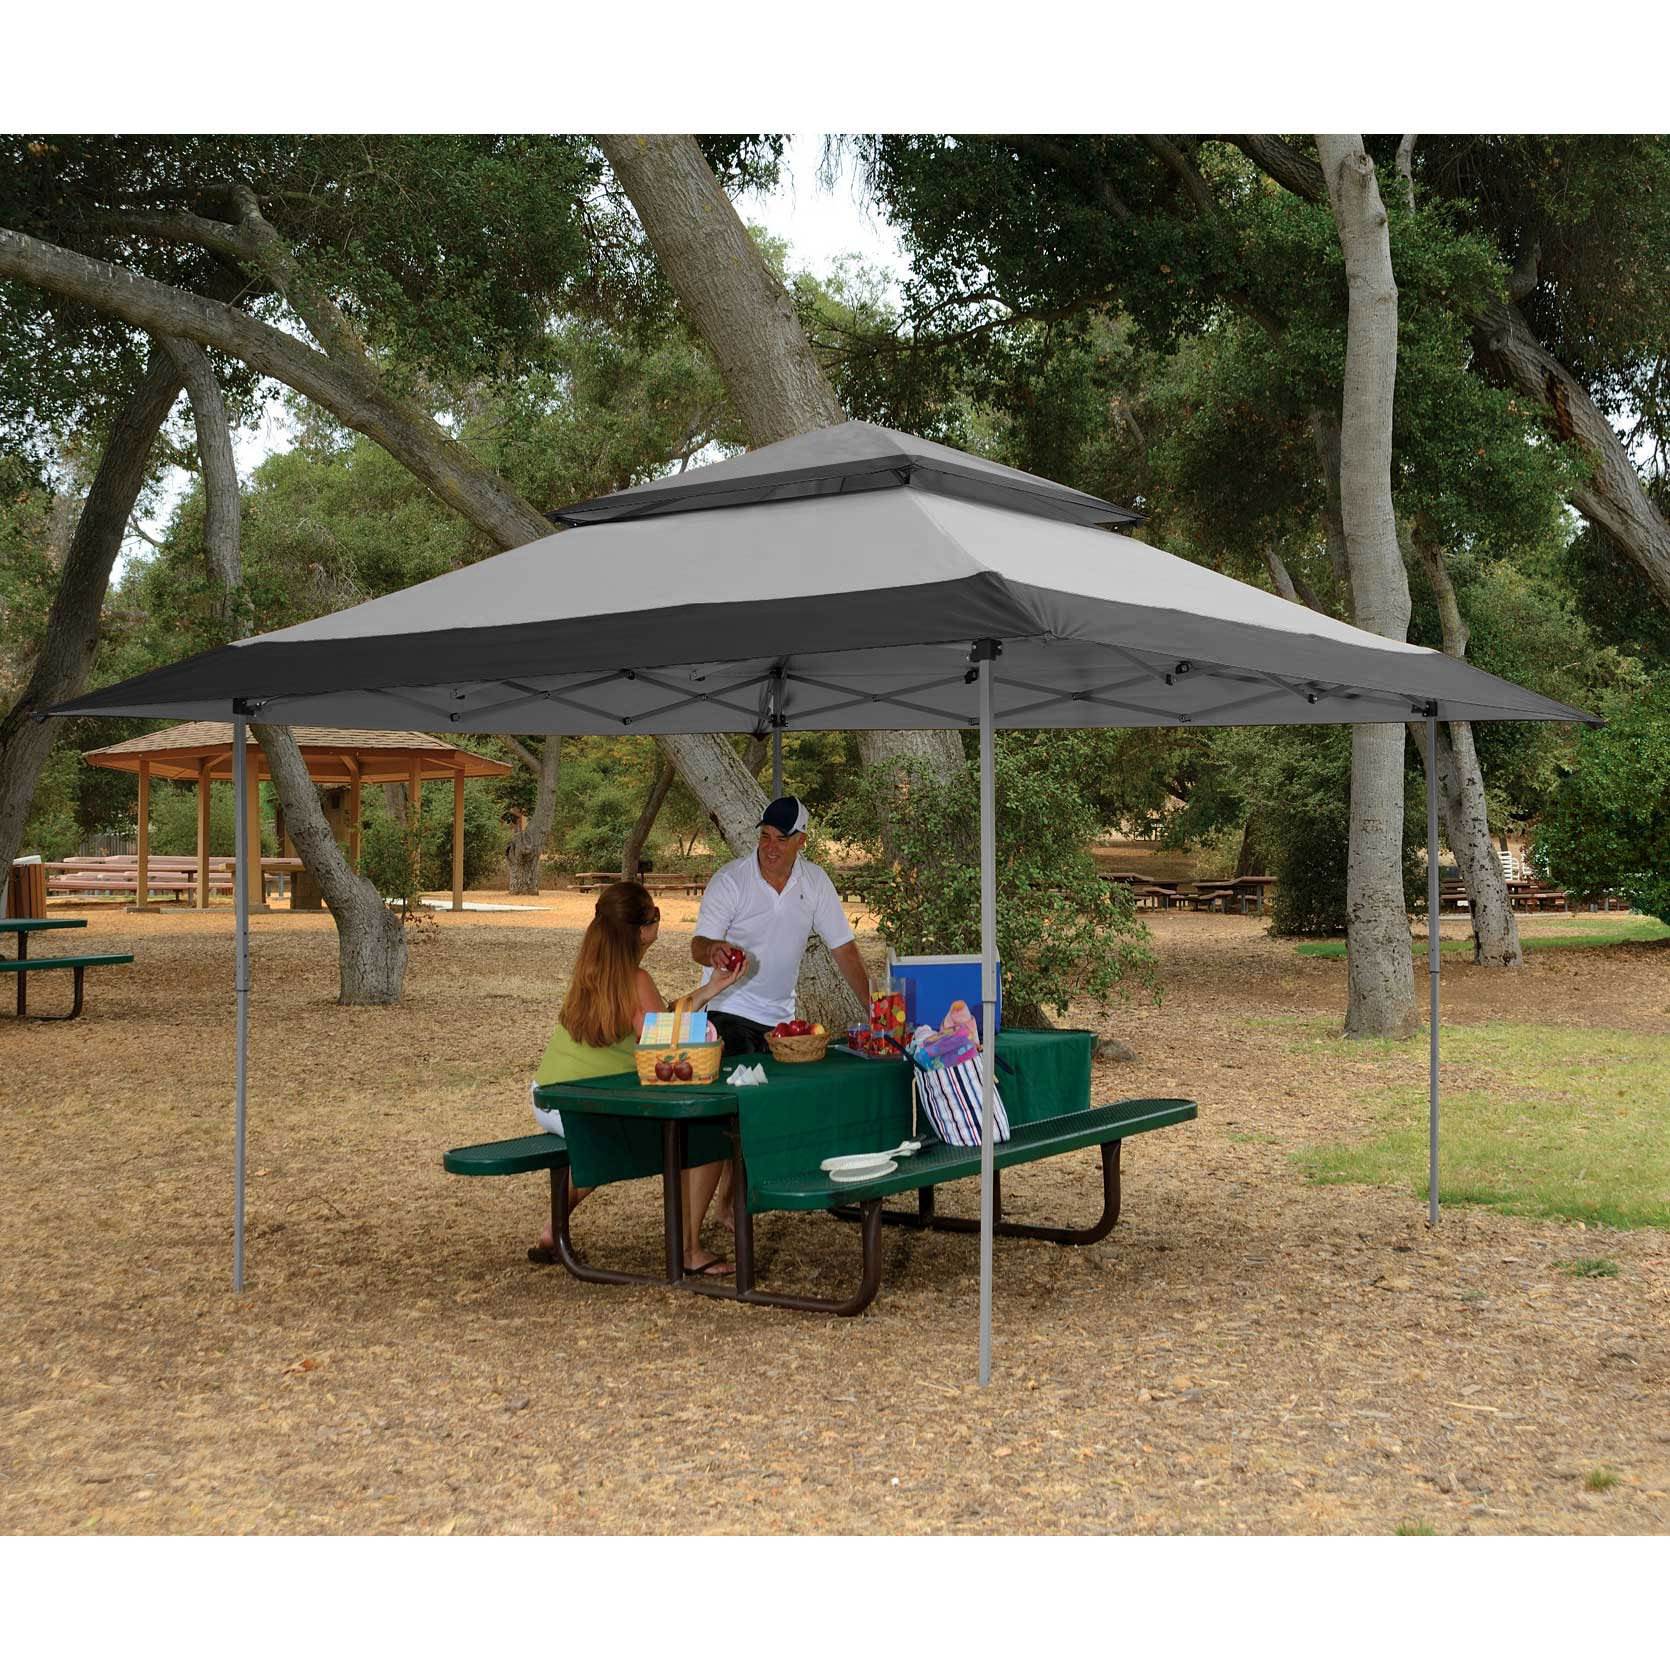 Z-Shade 13 x 13 Foot Instant Gazebo Outdoor Canopy Tent, Gray